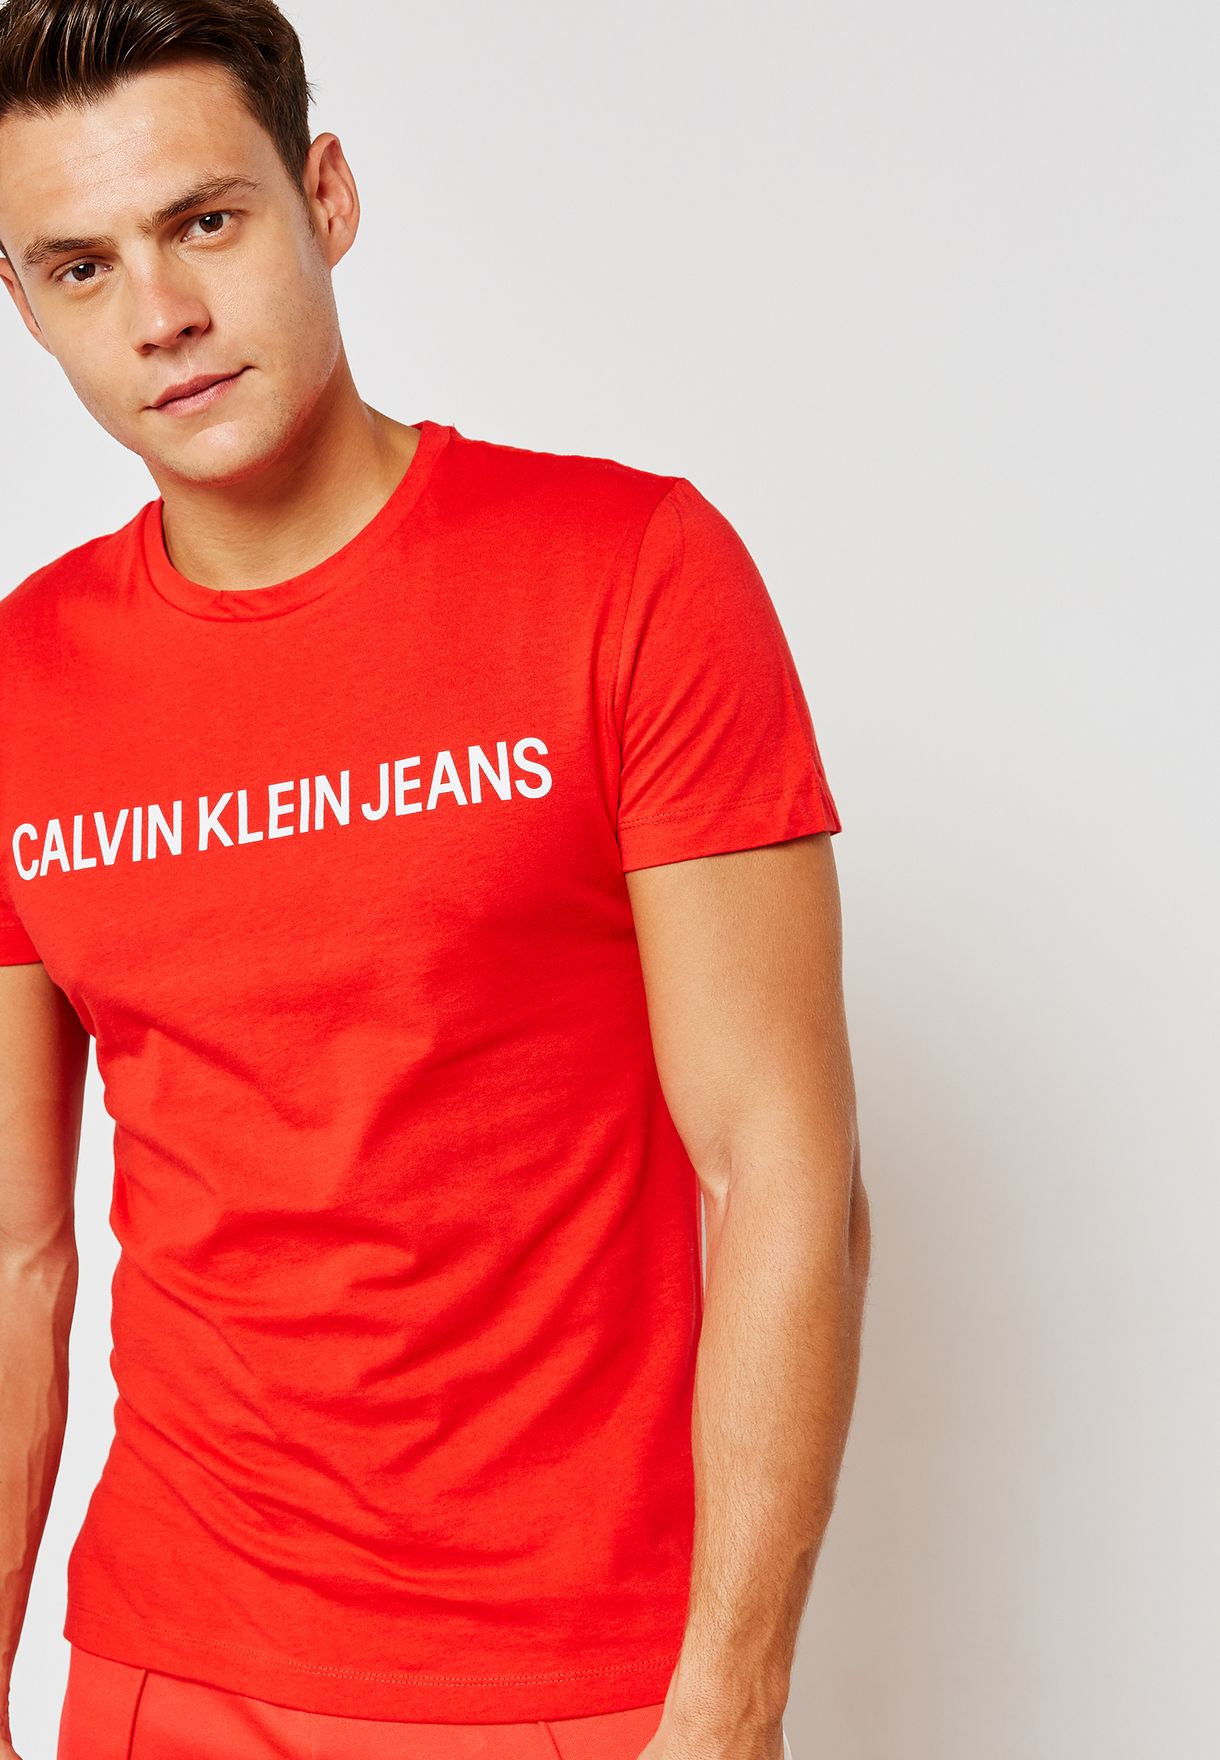 calvin klein jeans red t shirt